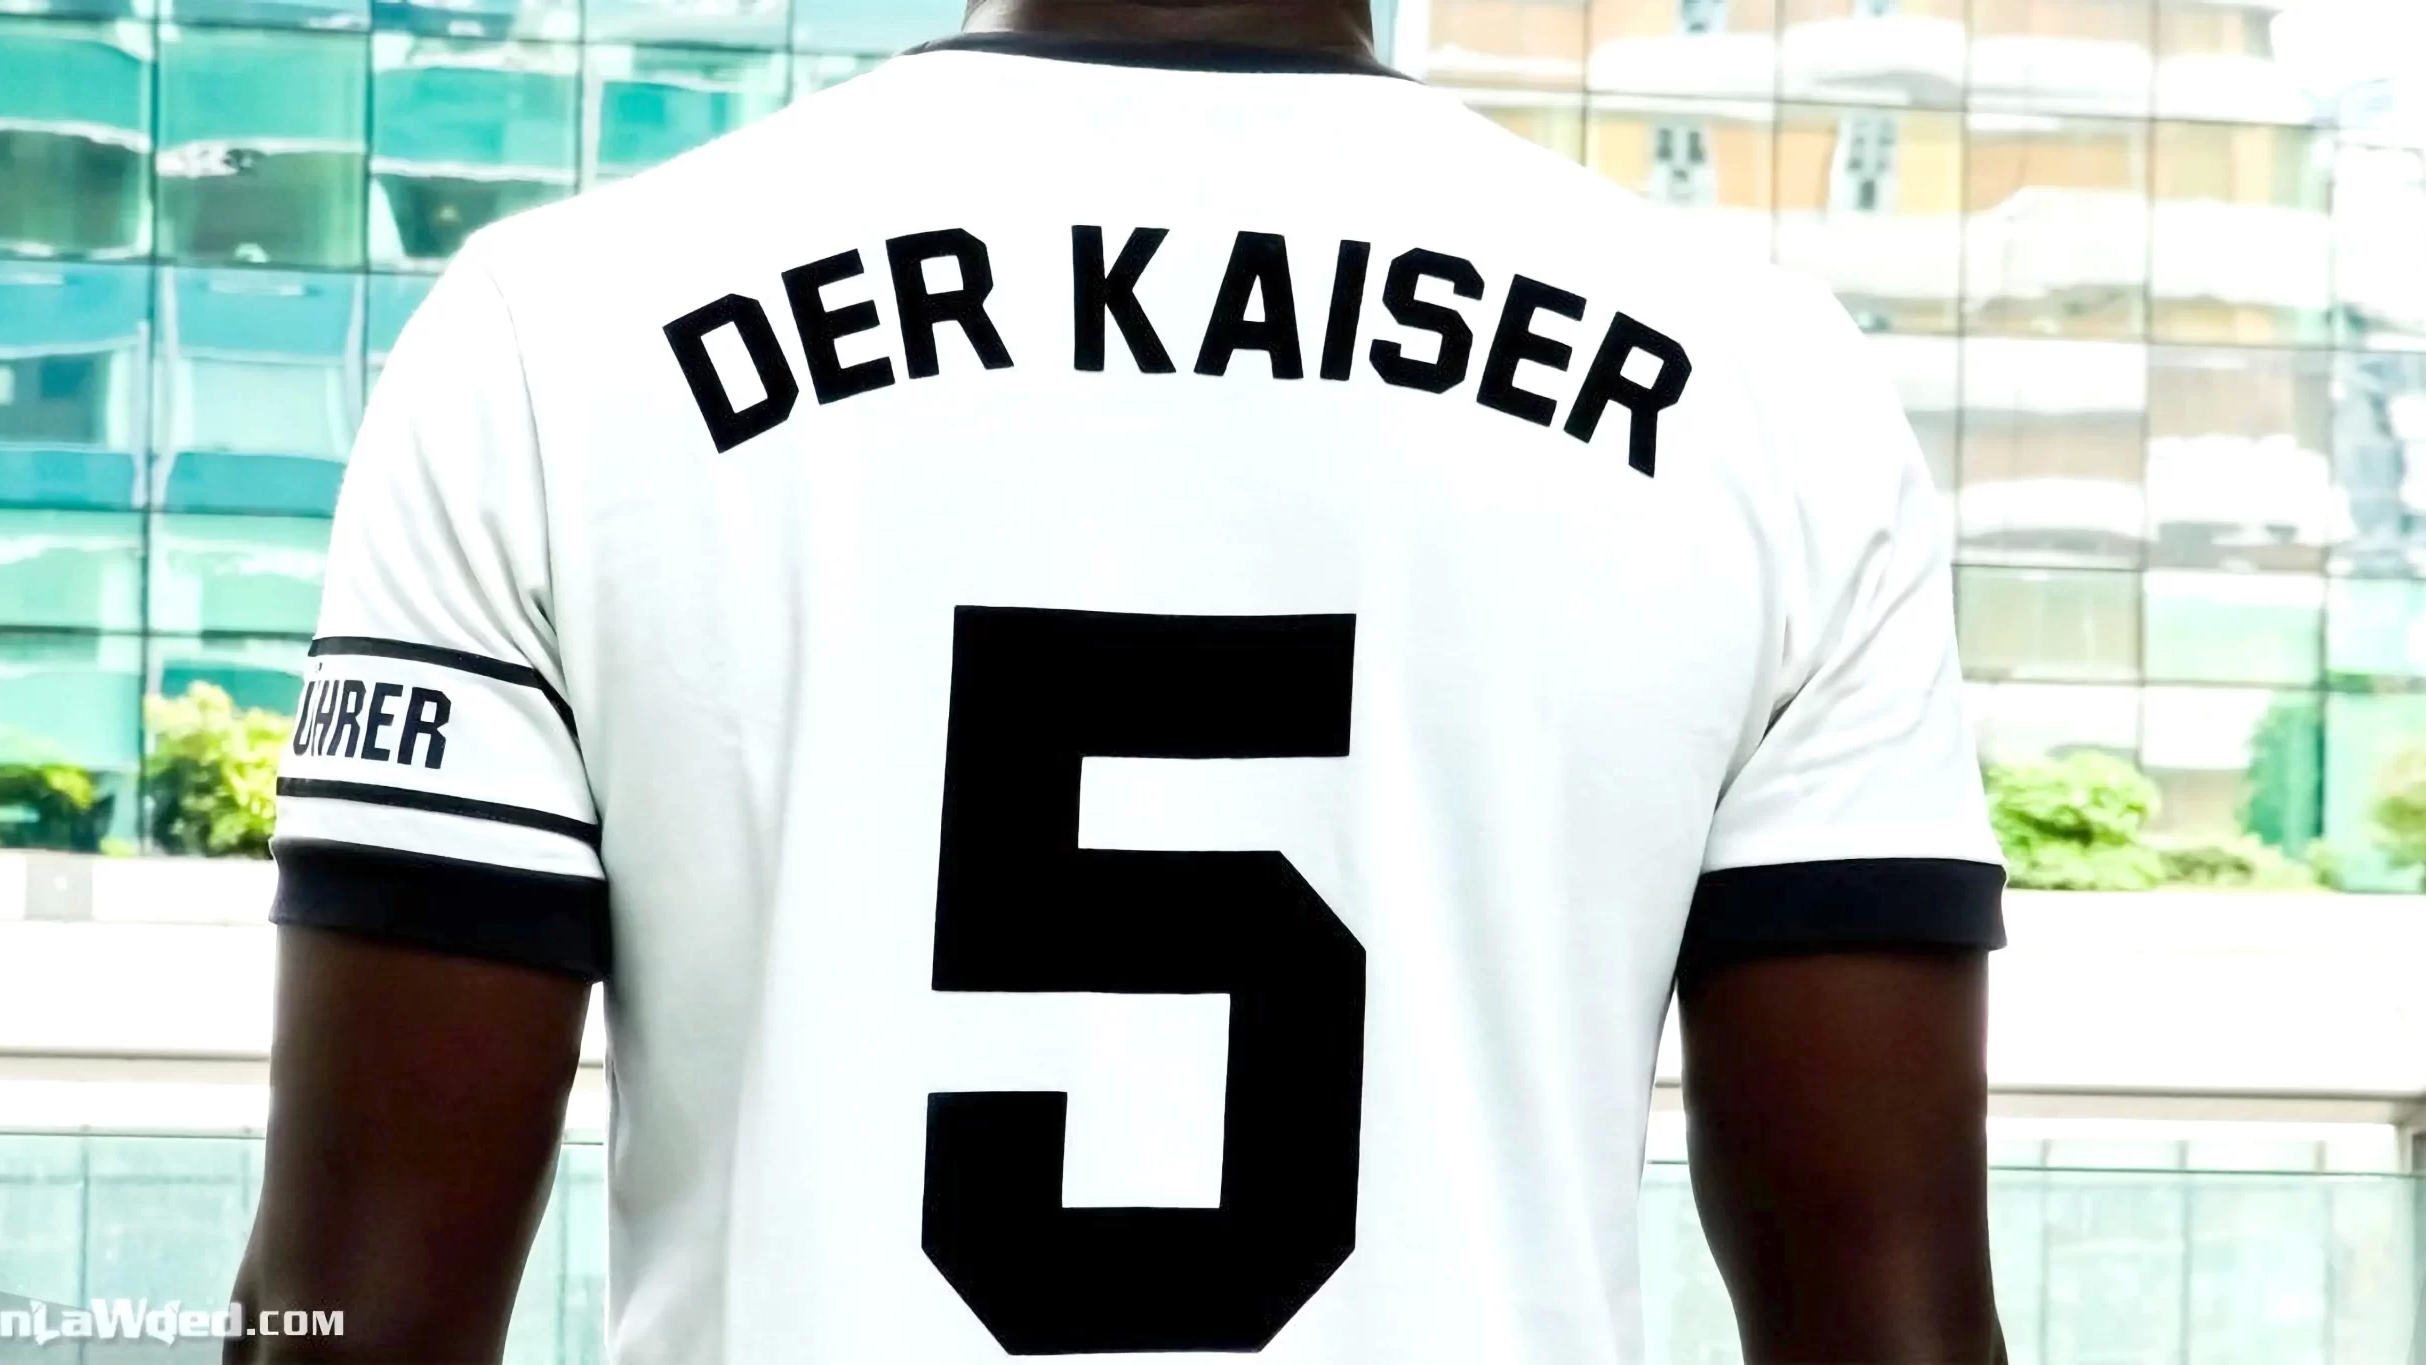 Men’s 2006 Der Kaiser ’74 T-shirt by Adidas Originals: Effective (EnLawded.com file #lmchk89904ip2y122908kg9st)